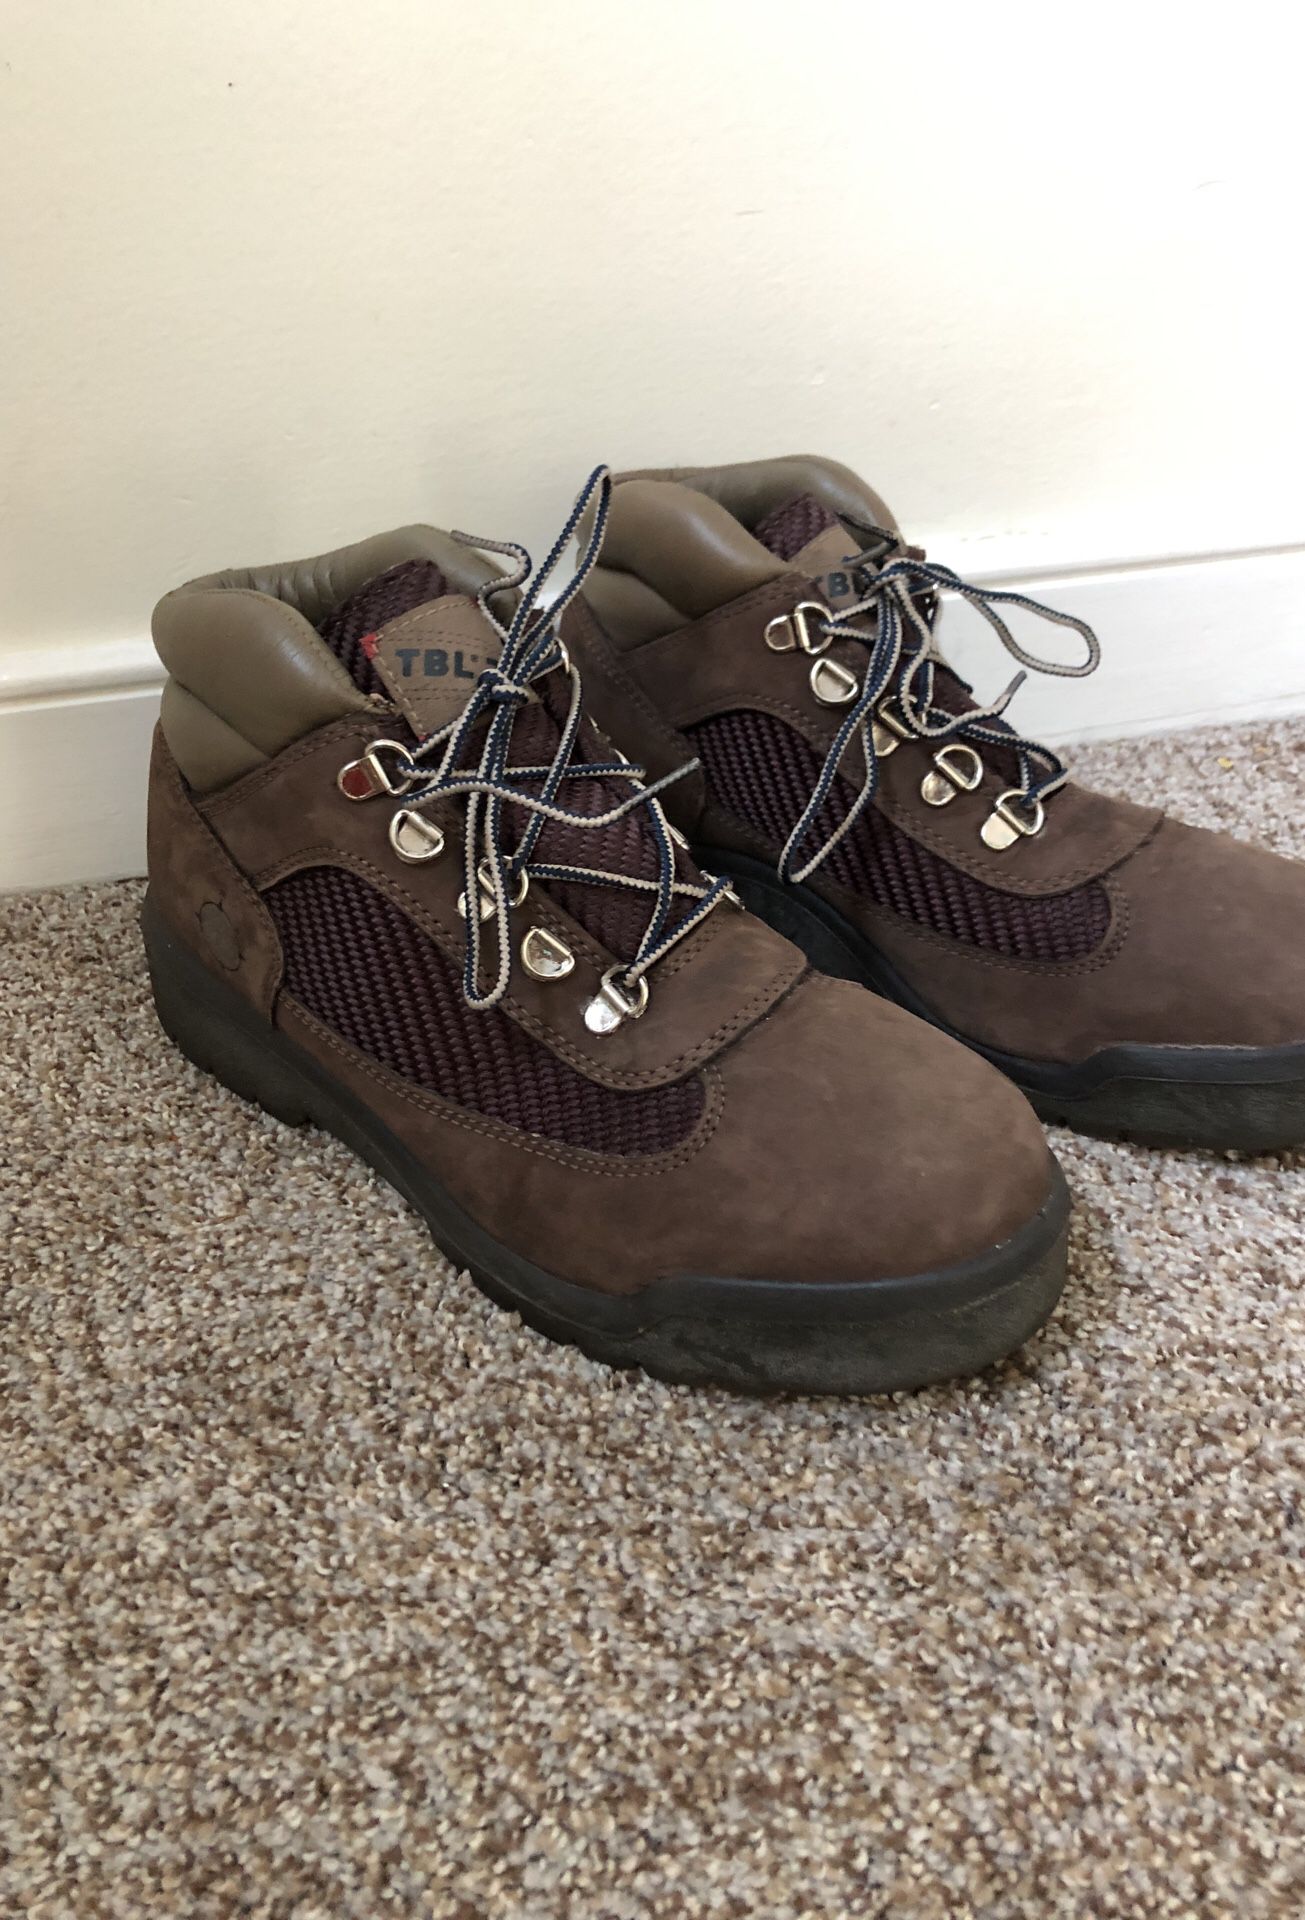 Timberland hiking boot $15